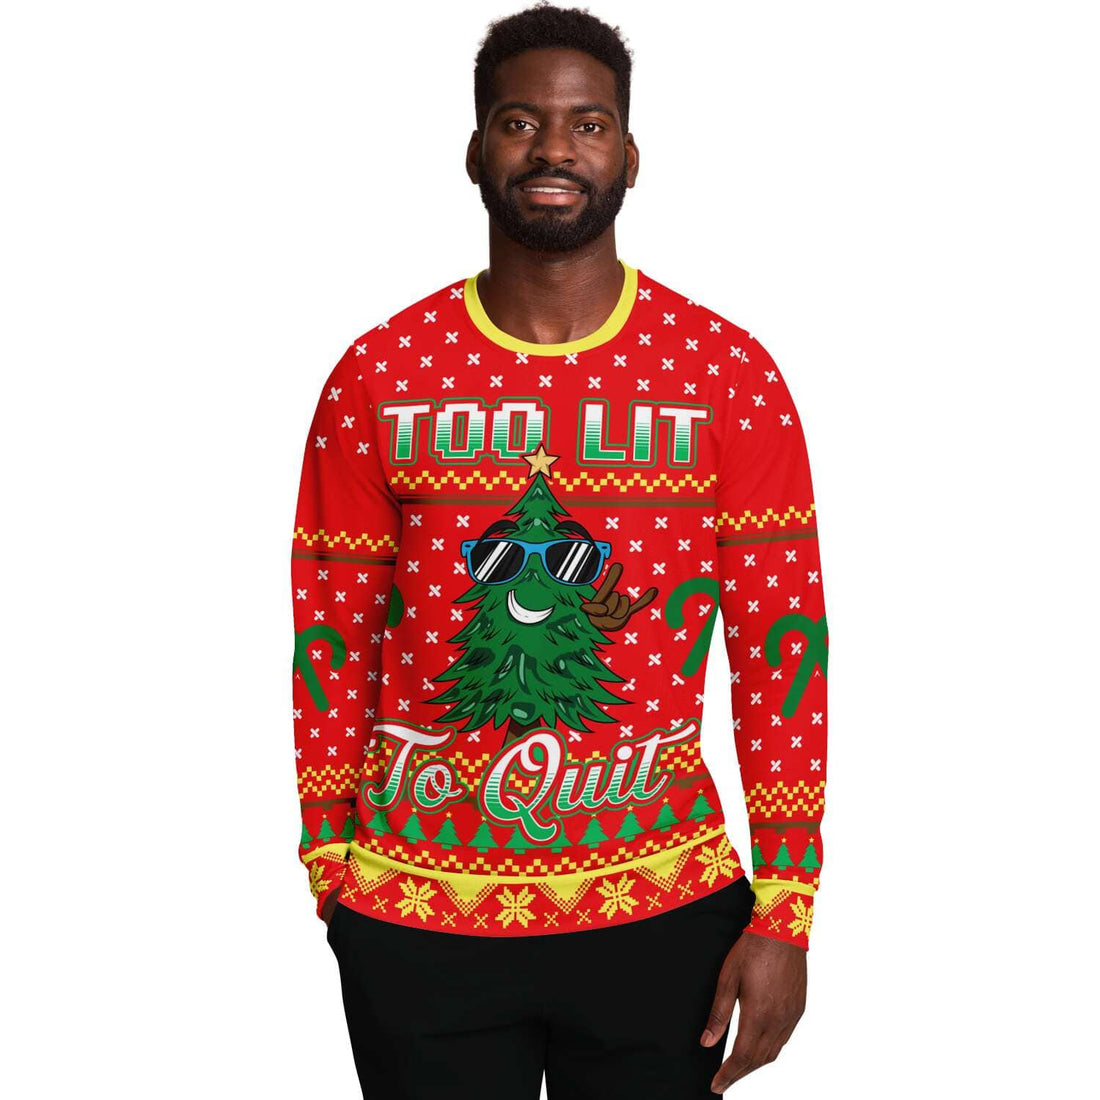 Kate McEnroe New York Too Lit To Quit Ugly Christmas SweatersSweatshirtSBSWF_D - 8926 - XS